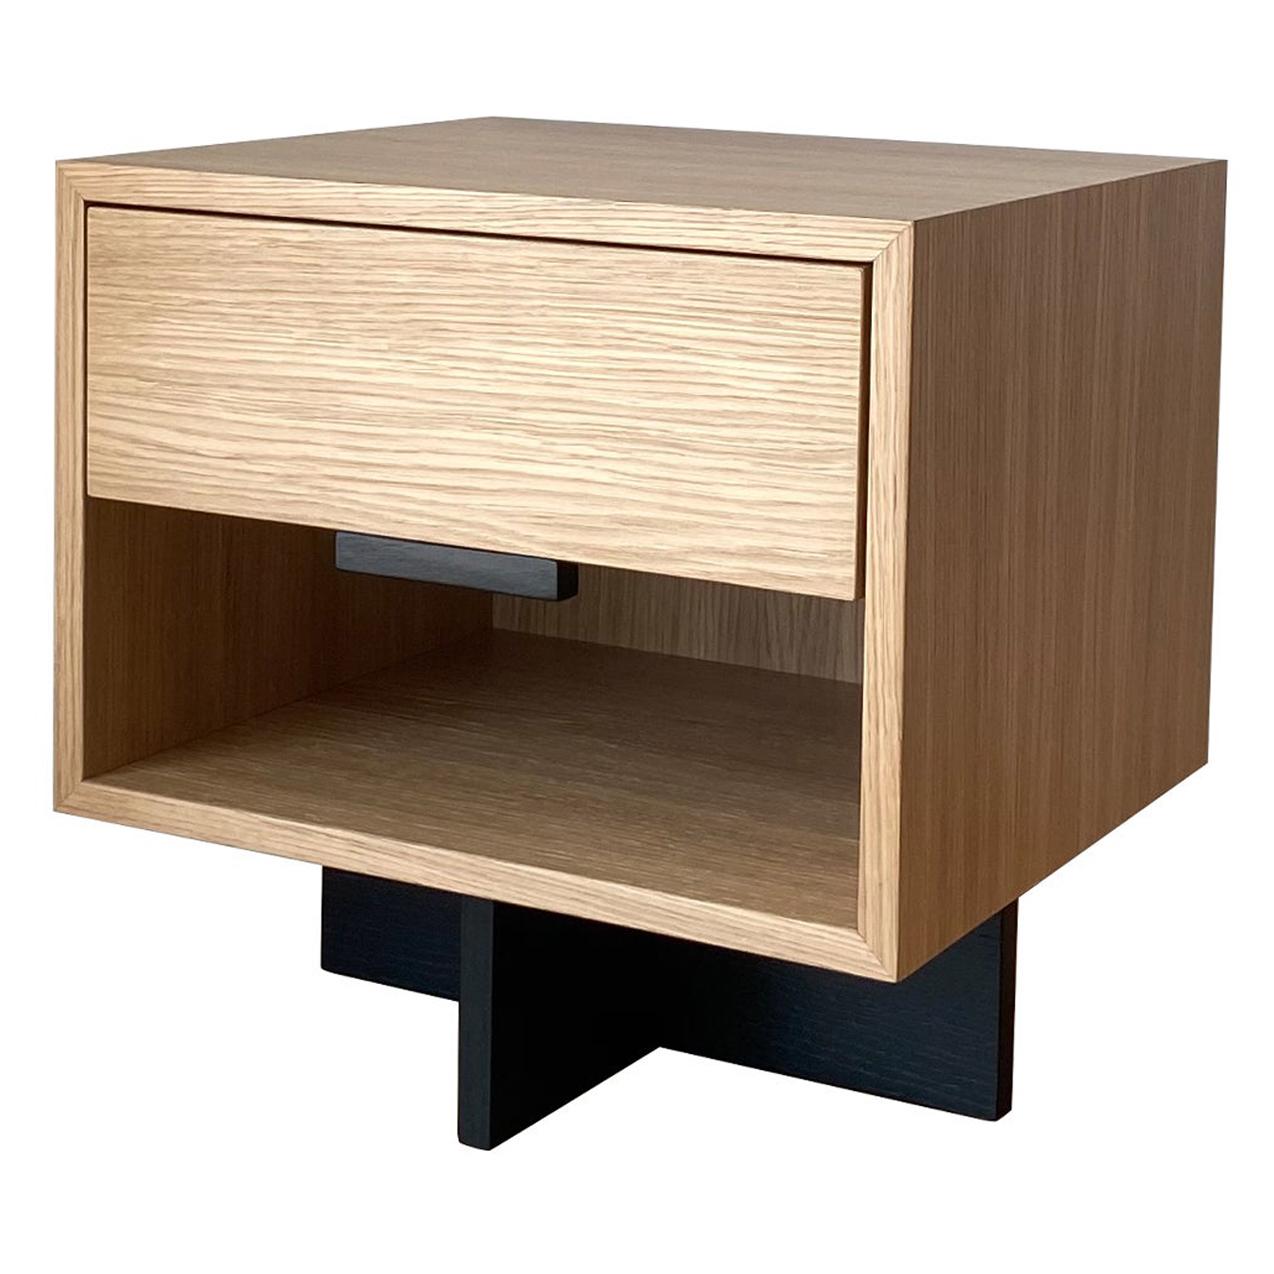 Kaid Nightstand, Contemporary Modern Minimalist Two-Tone Wooden Oak